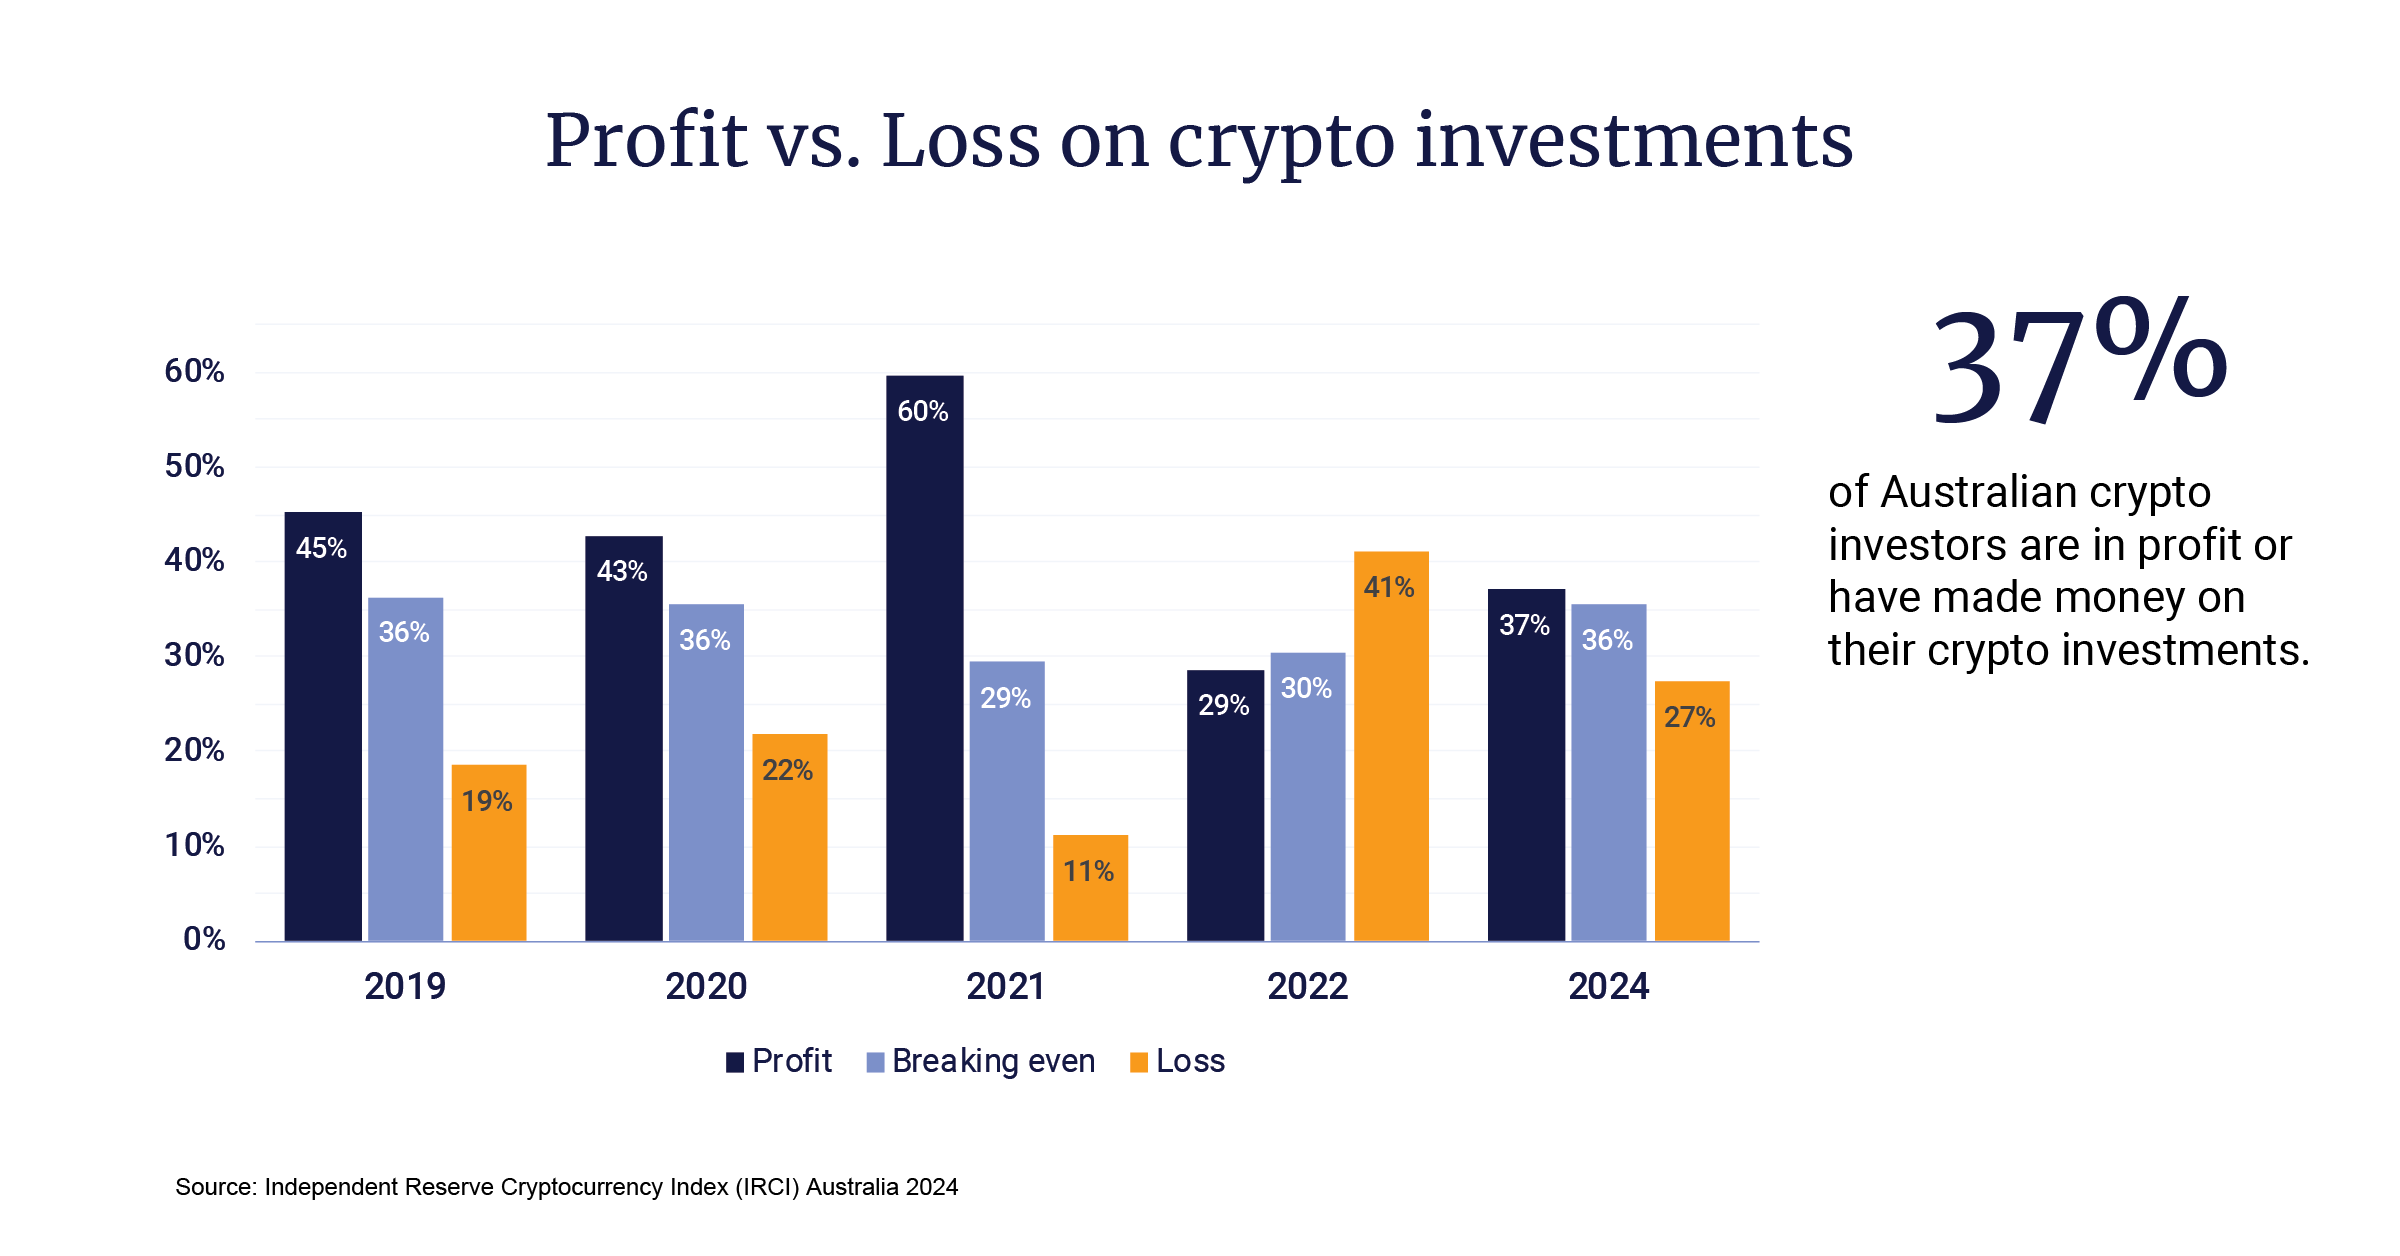 Profit v Loss in crypto investments Australia (IRCI 2024)